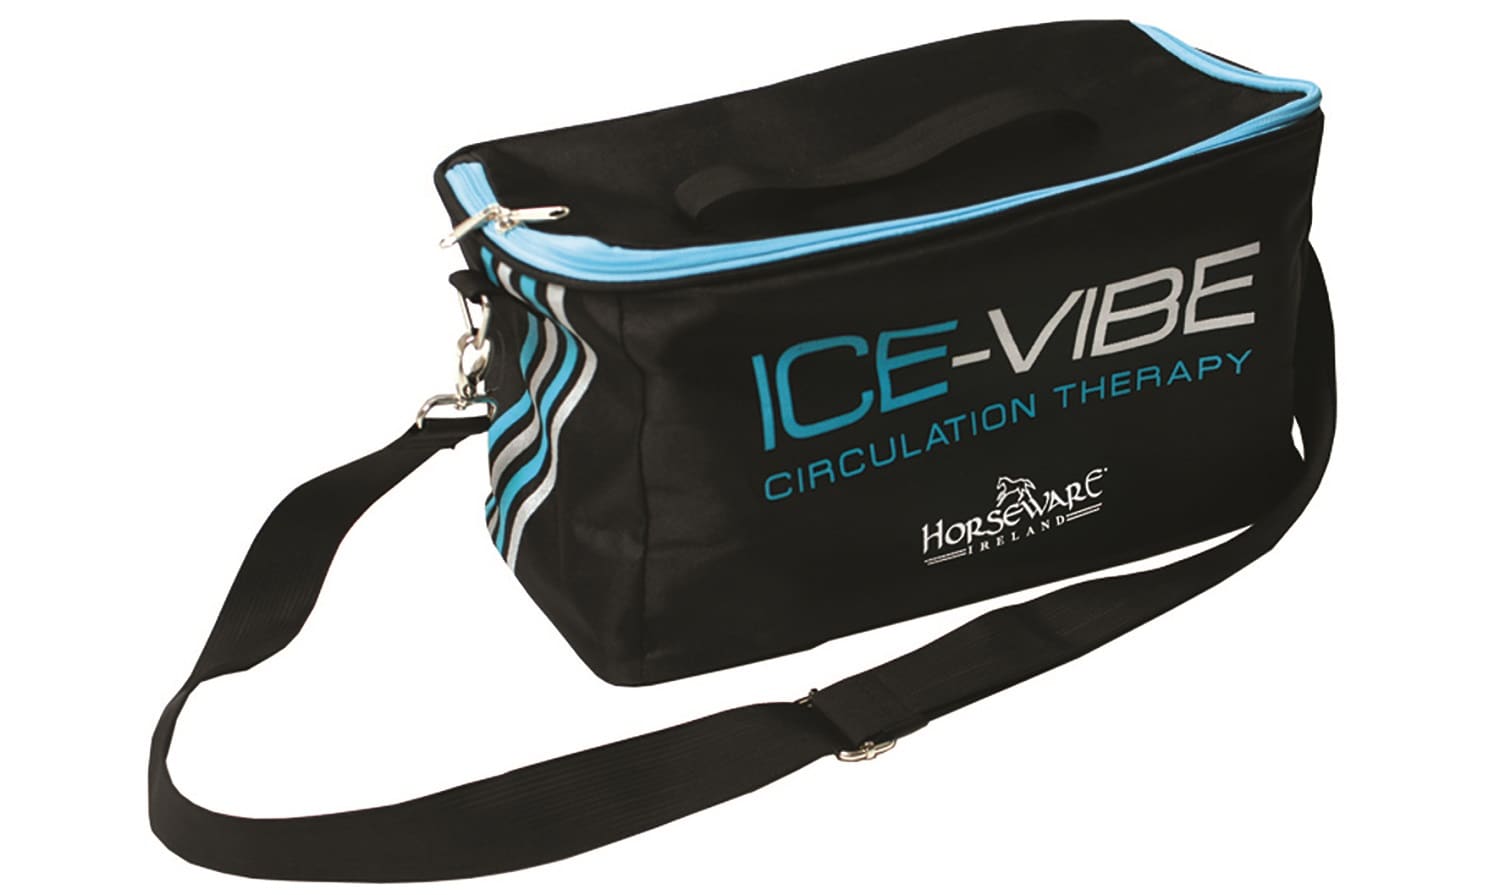 Sac glacière Horseware Ice-Vibe